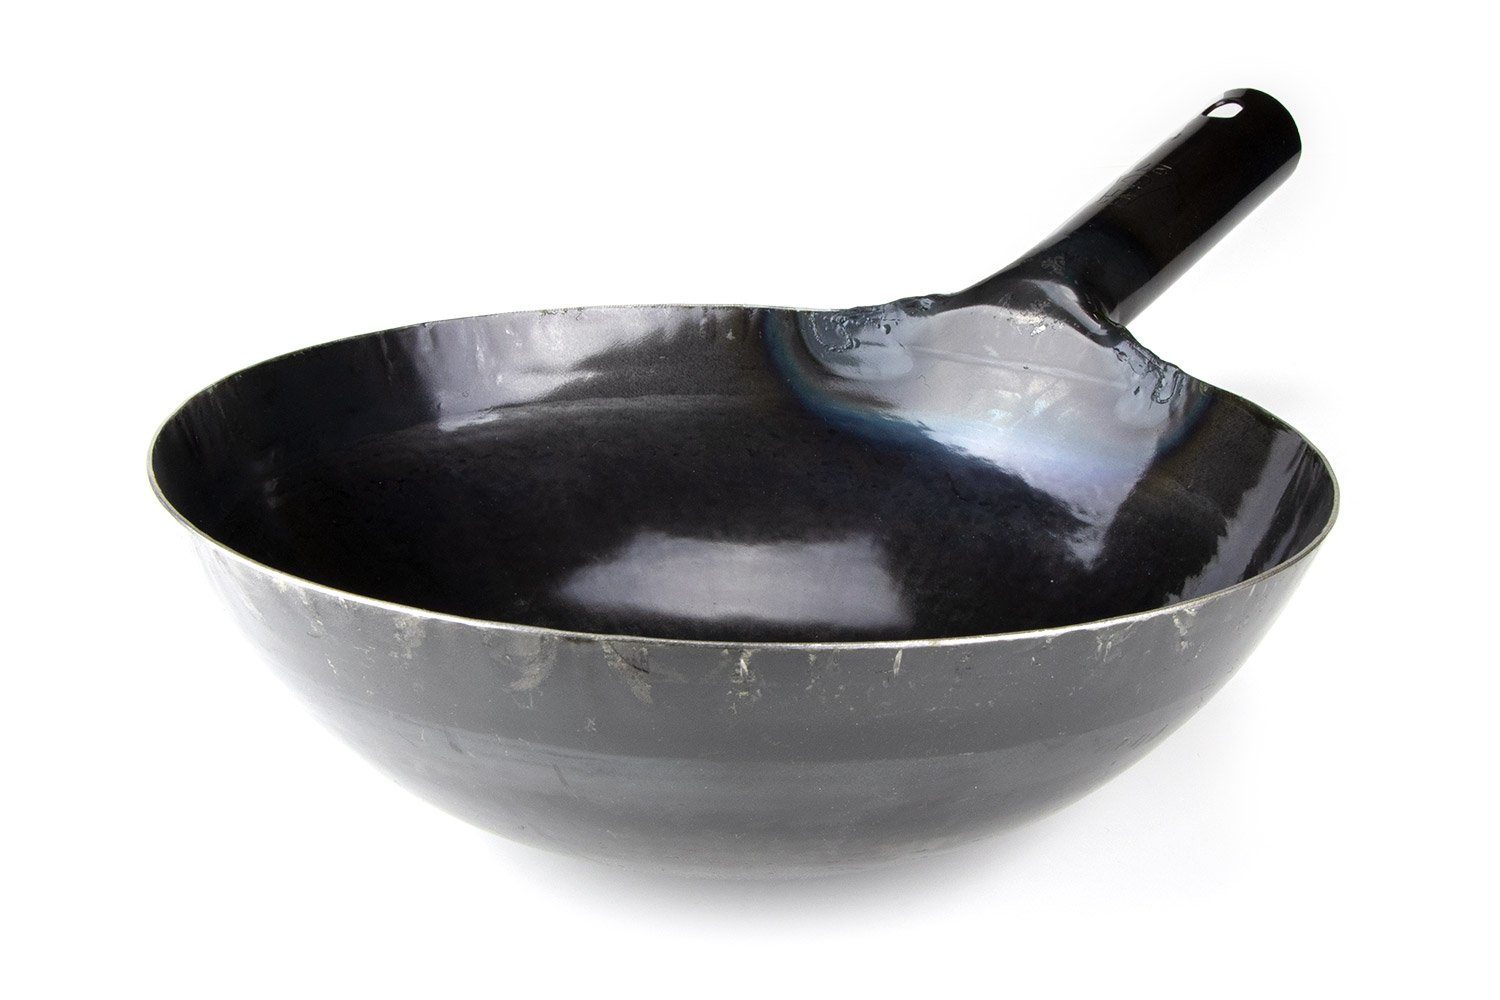 Yamada Brand: Steel Chinese Wok Pan: Hammered made Iron pan, wok